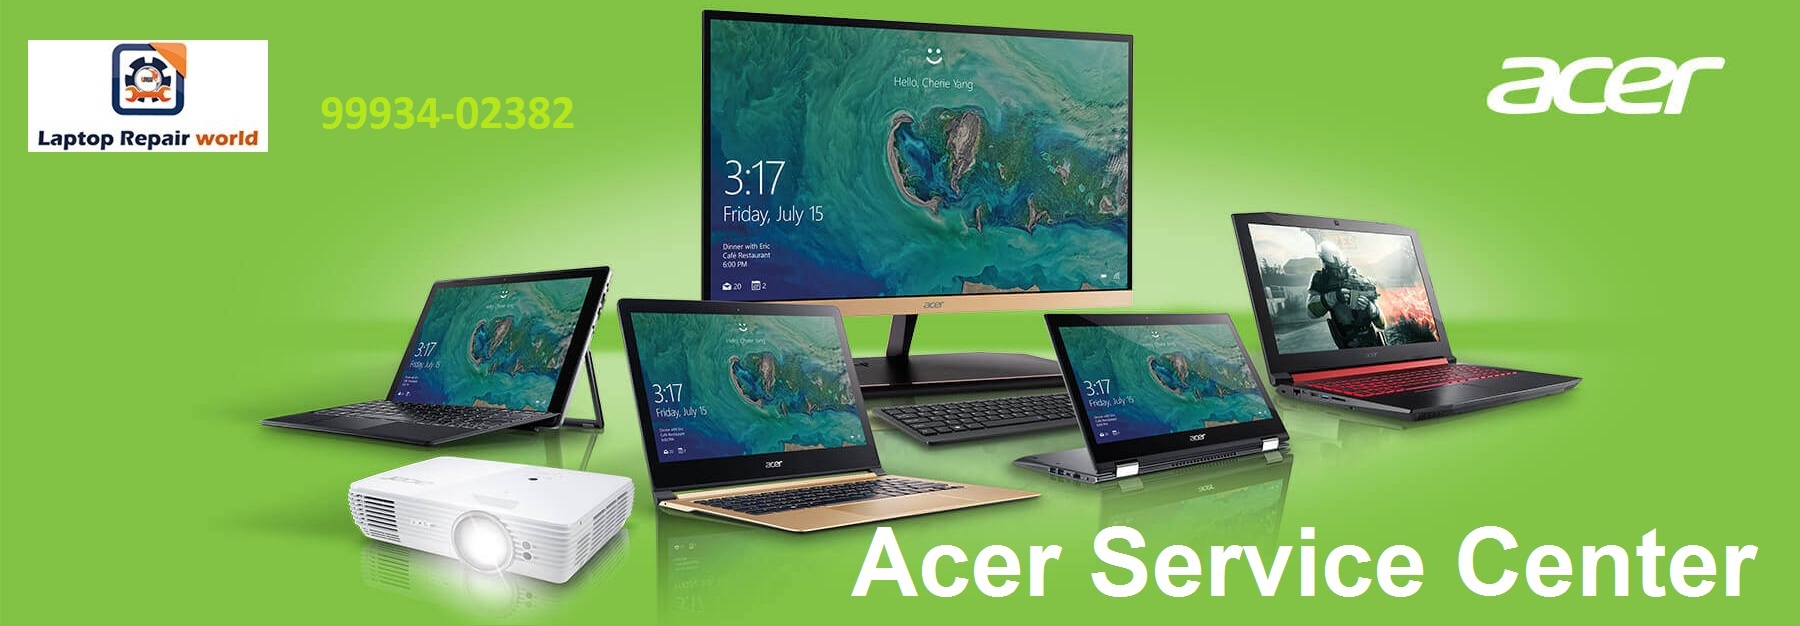 Acer Service Center Airoli